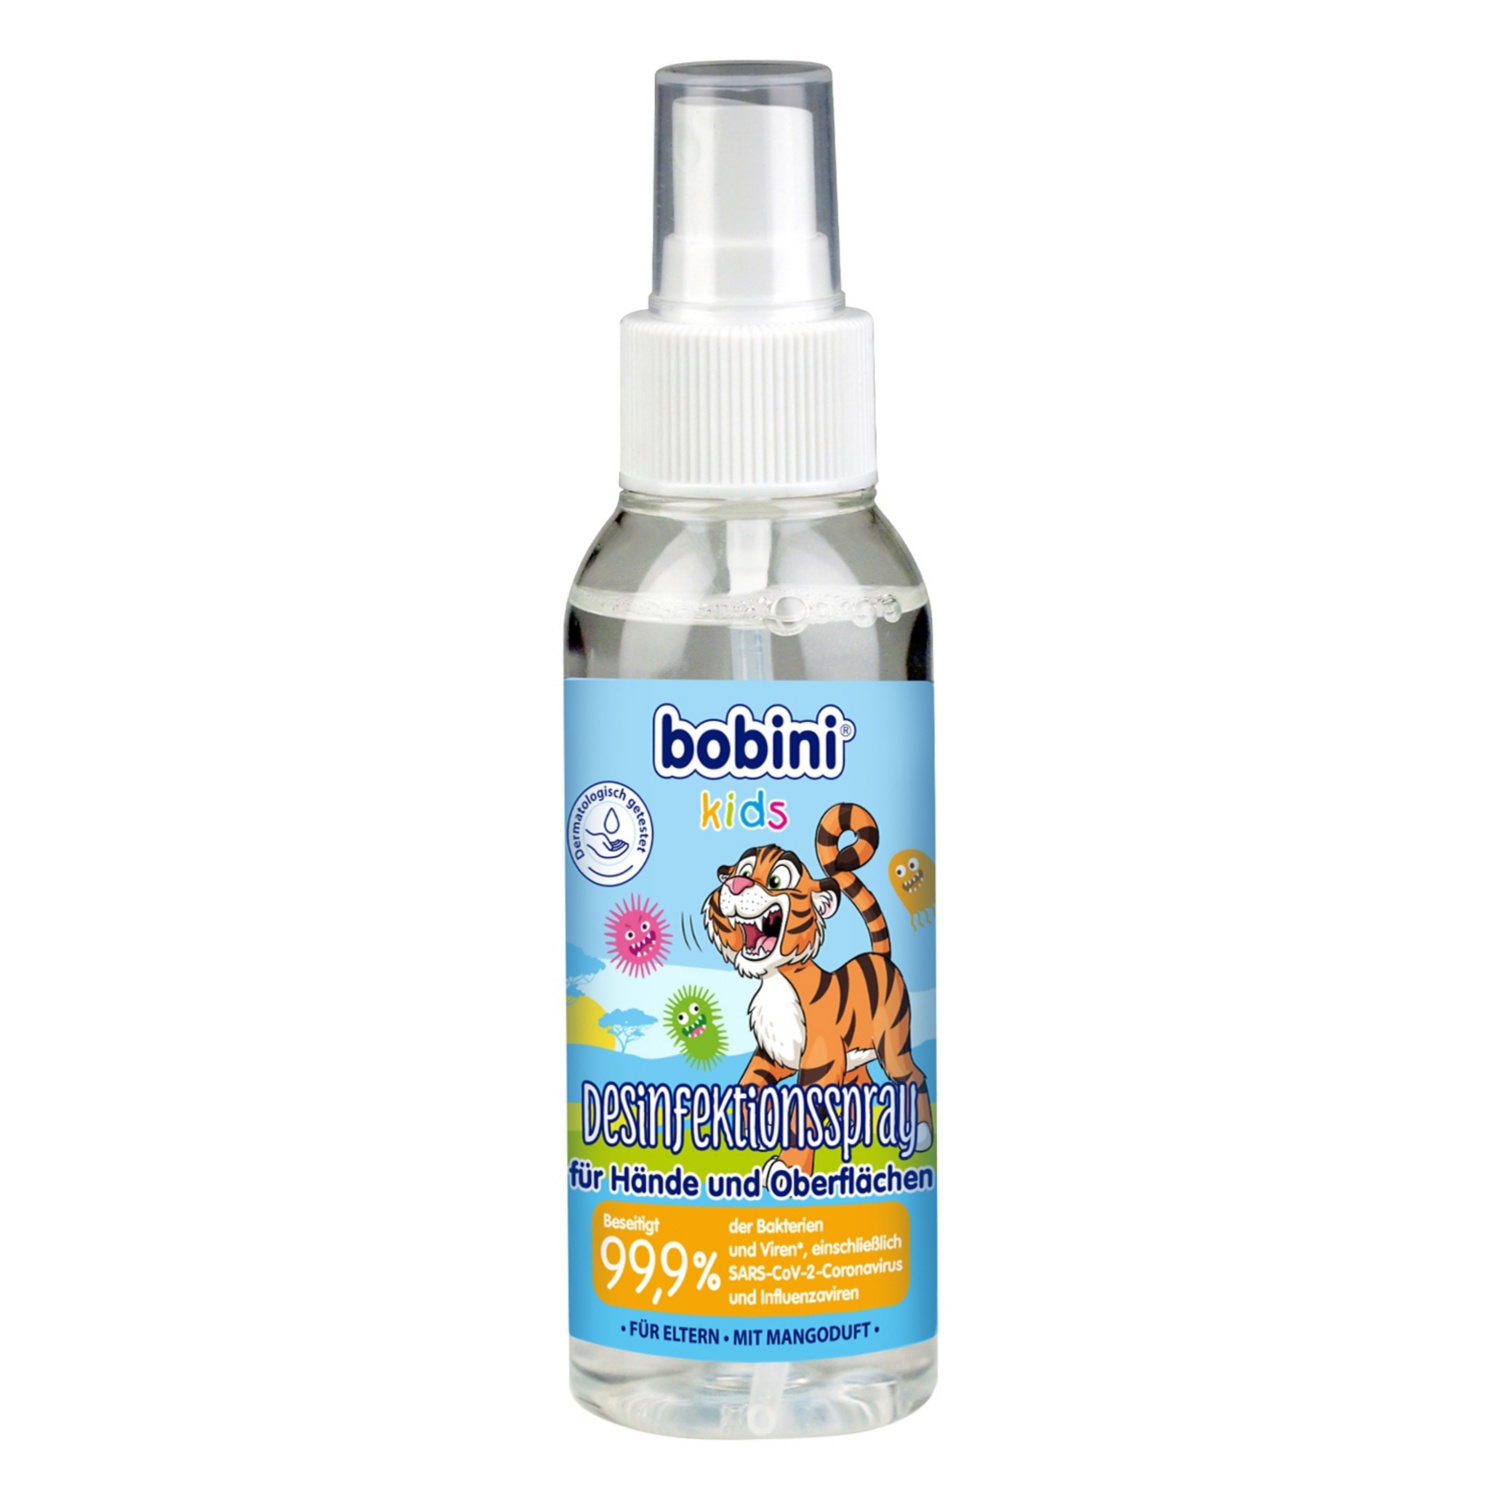 bobini® kids Desinfektionsspray² 100 ml